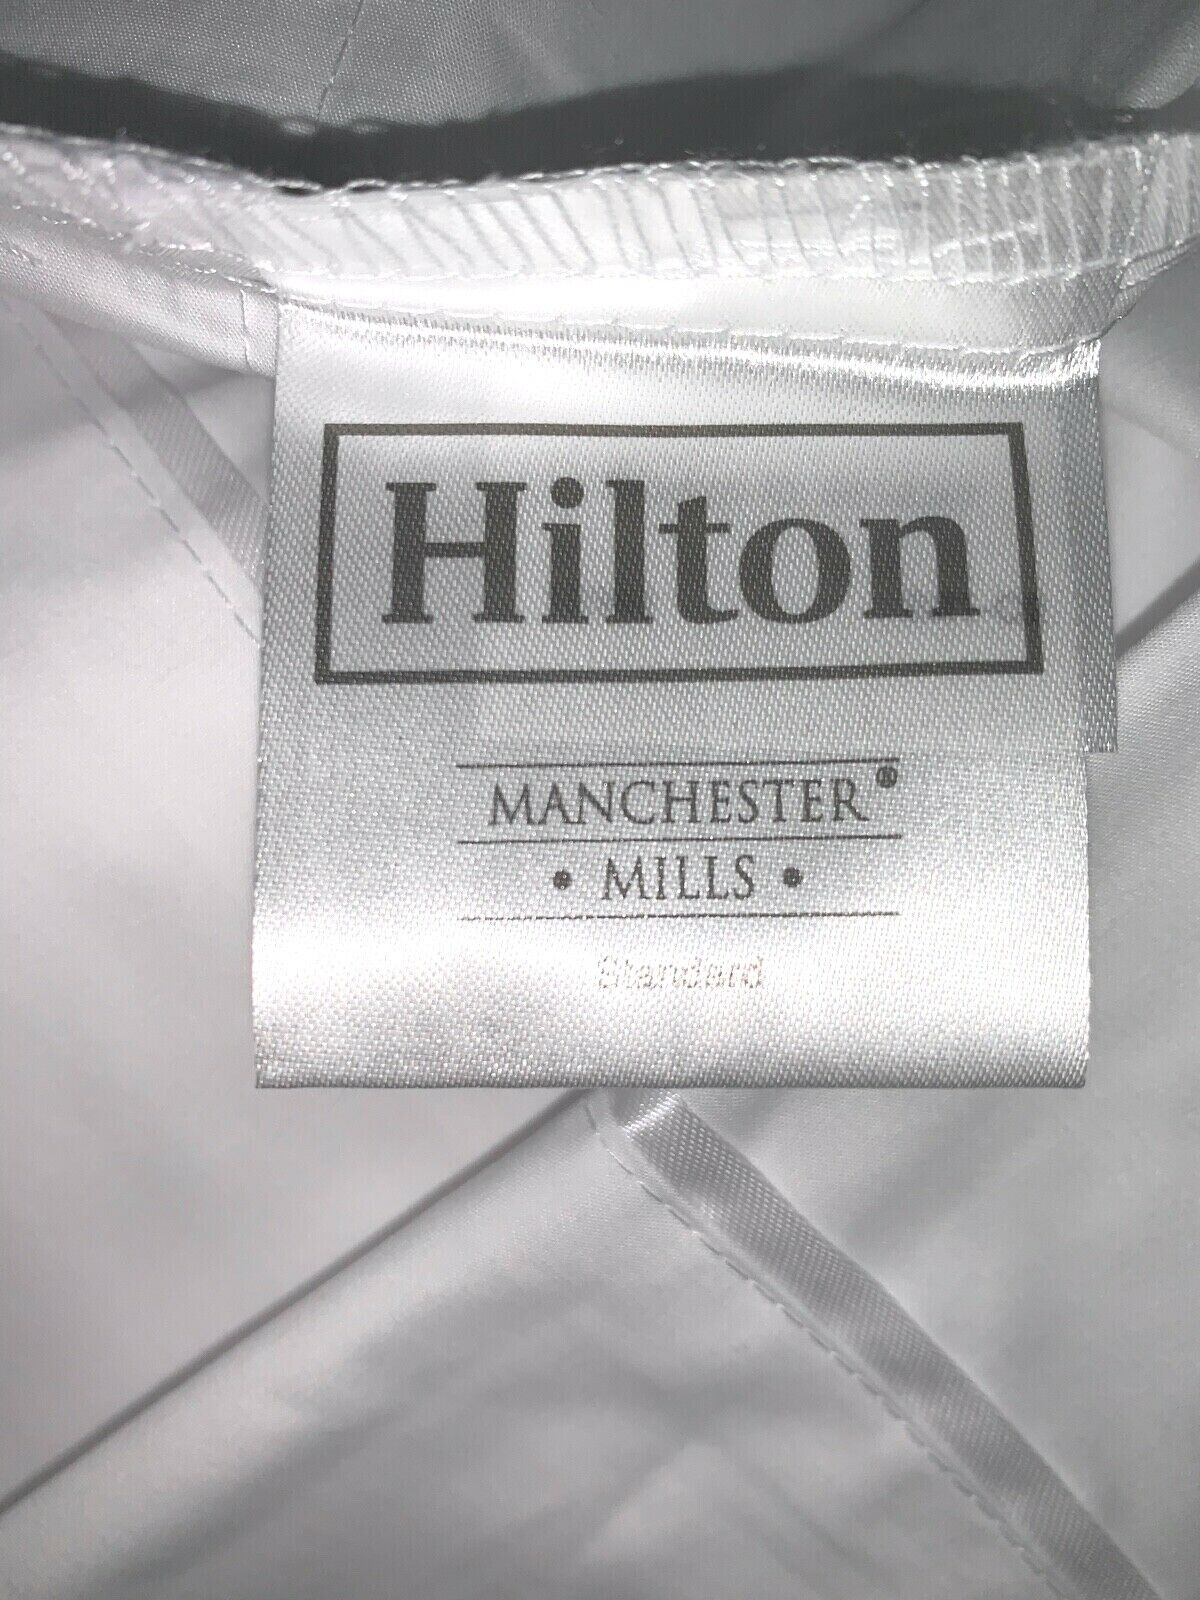 12 Pack Hilton Hotel Pillowcases T250 White QUEEN / STANDARD Sz W/ Satan Piping Hilton / Manchester Mills 0019067